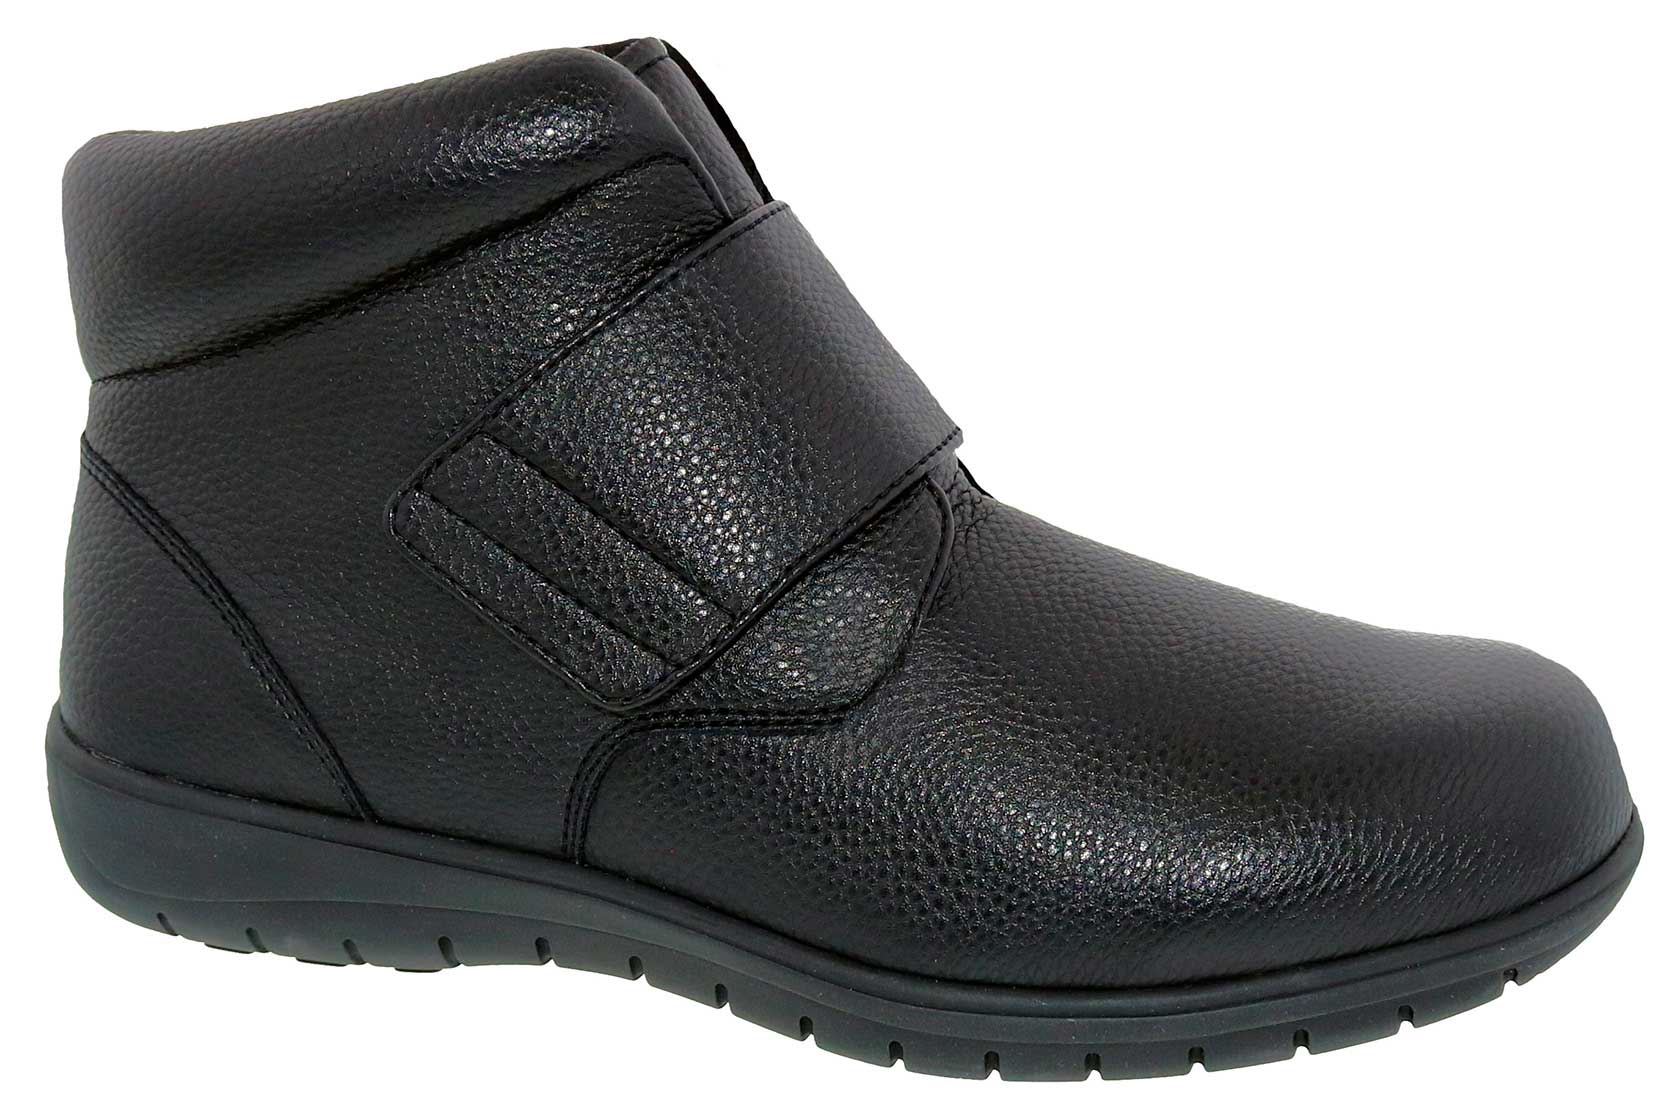 Footsaver Shoes Bridge 94859 - Men's 4 Comfort Therapeutic  Diabetic Casual Boot - Extra Depth For Orthotics